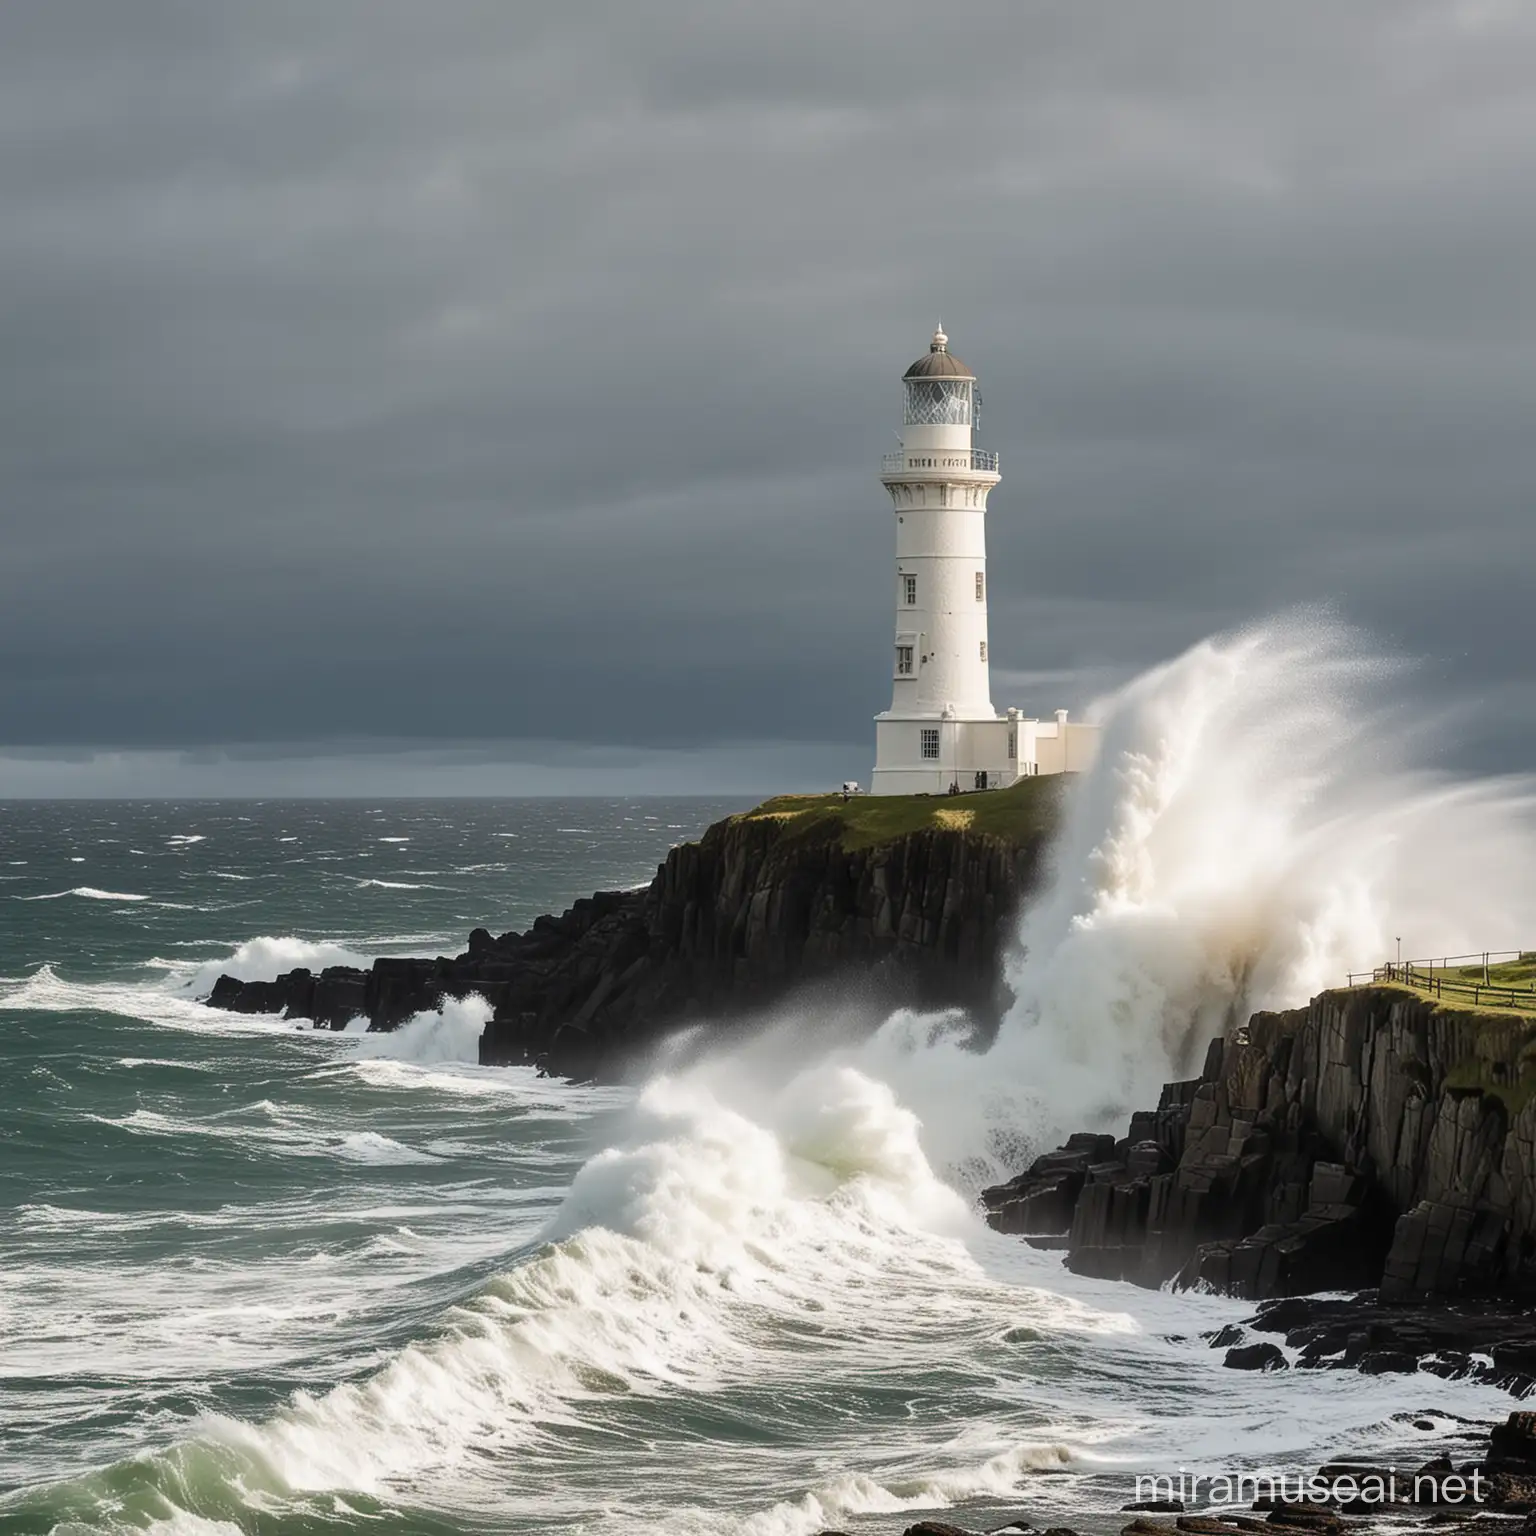 Dramatic Scottish Cliffside Lighthouse Battling Gigantic Wave